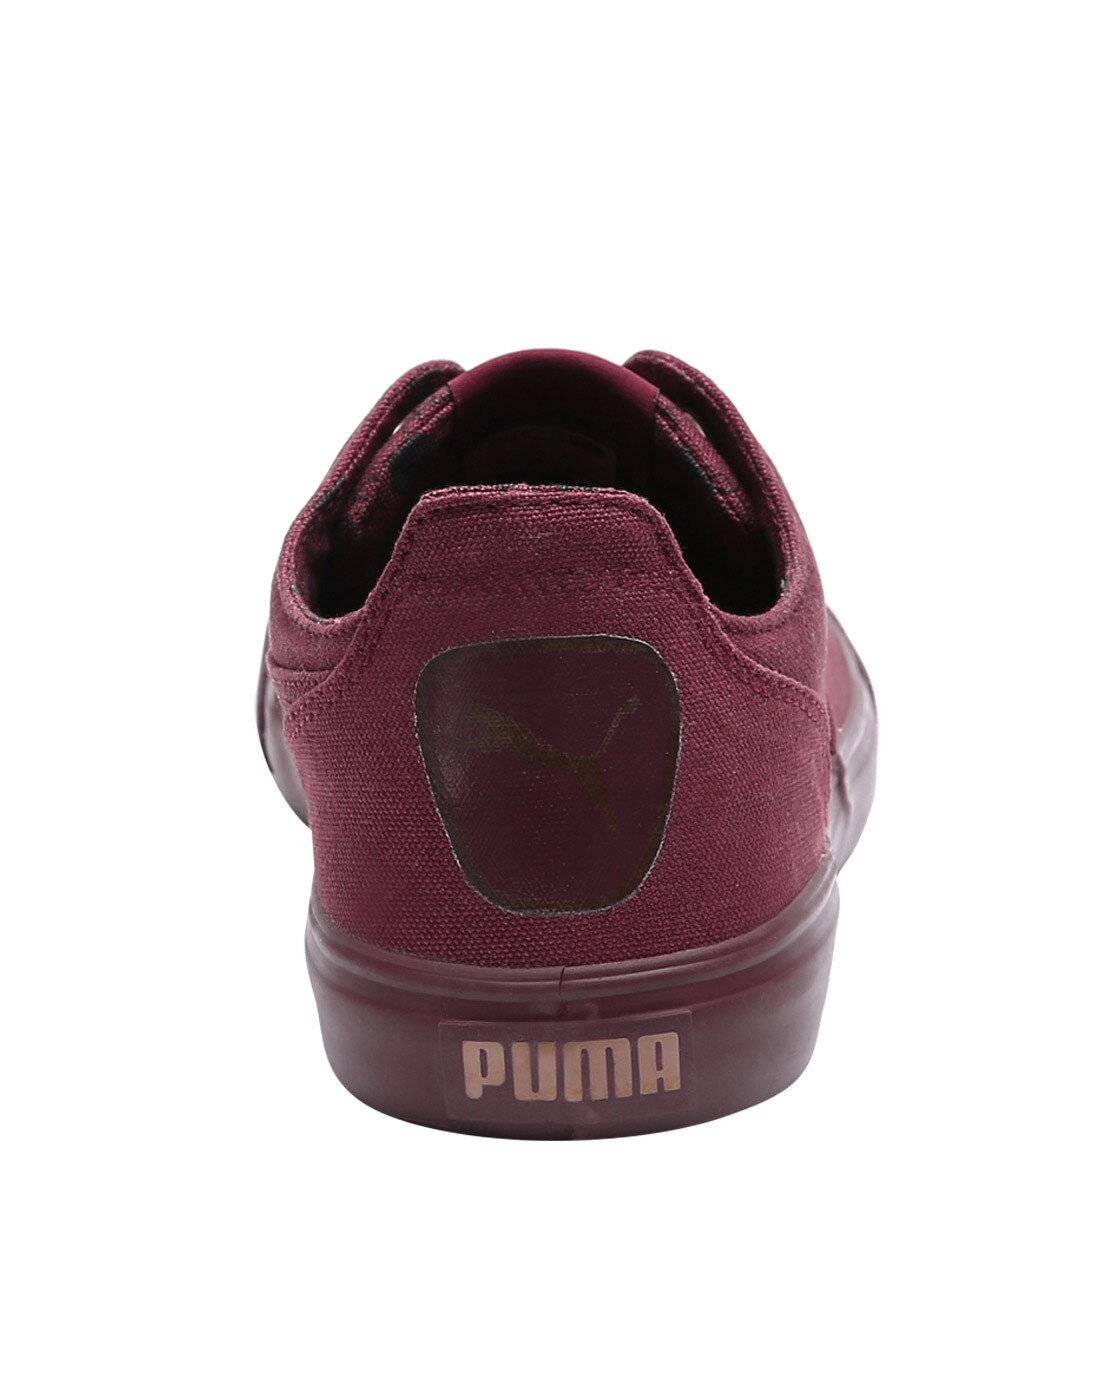 puma pop x idp canvas shoes for men